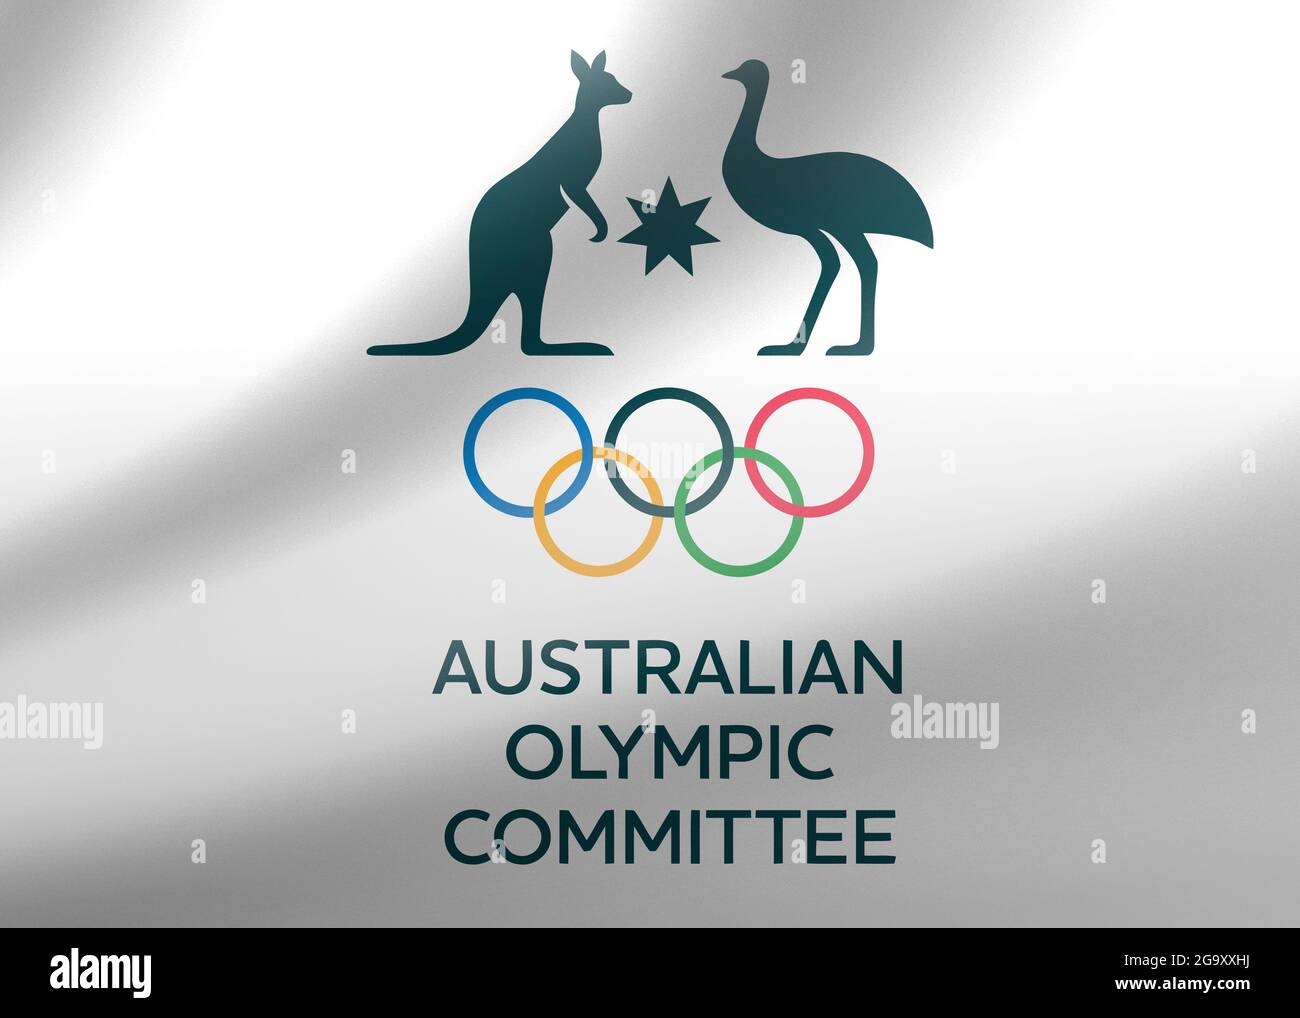 Australian Olympic Committee logo Stock Photo - Alamy